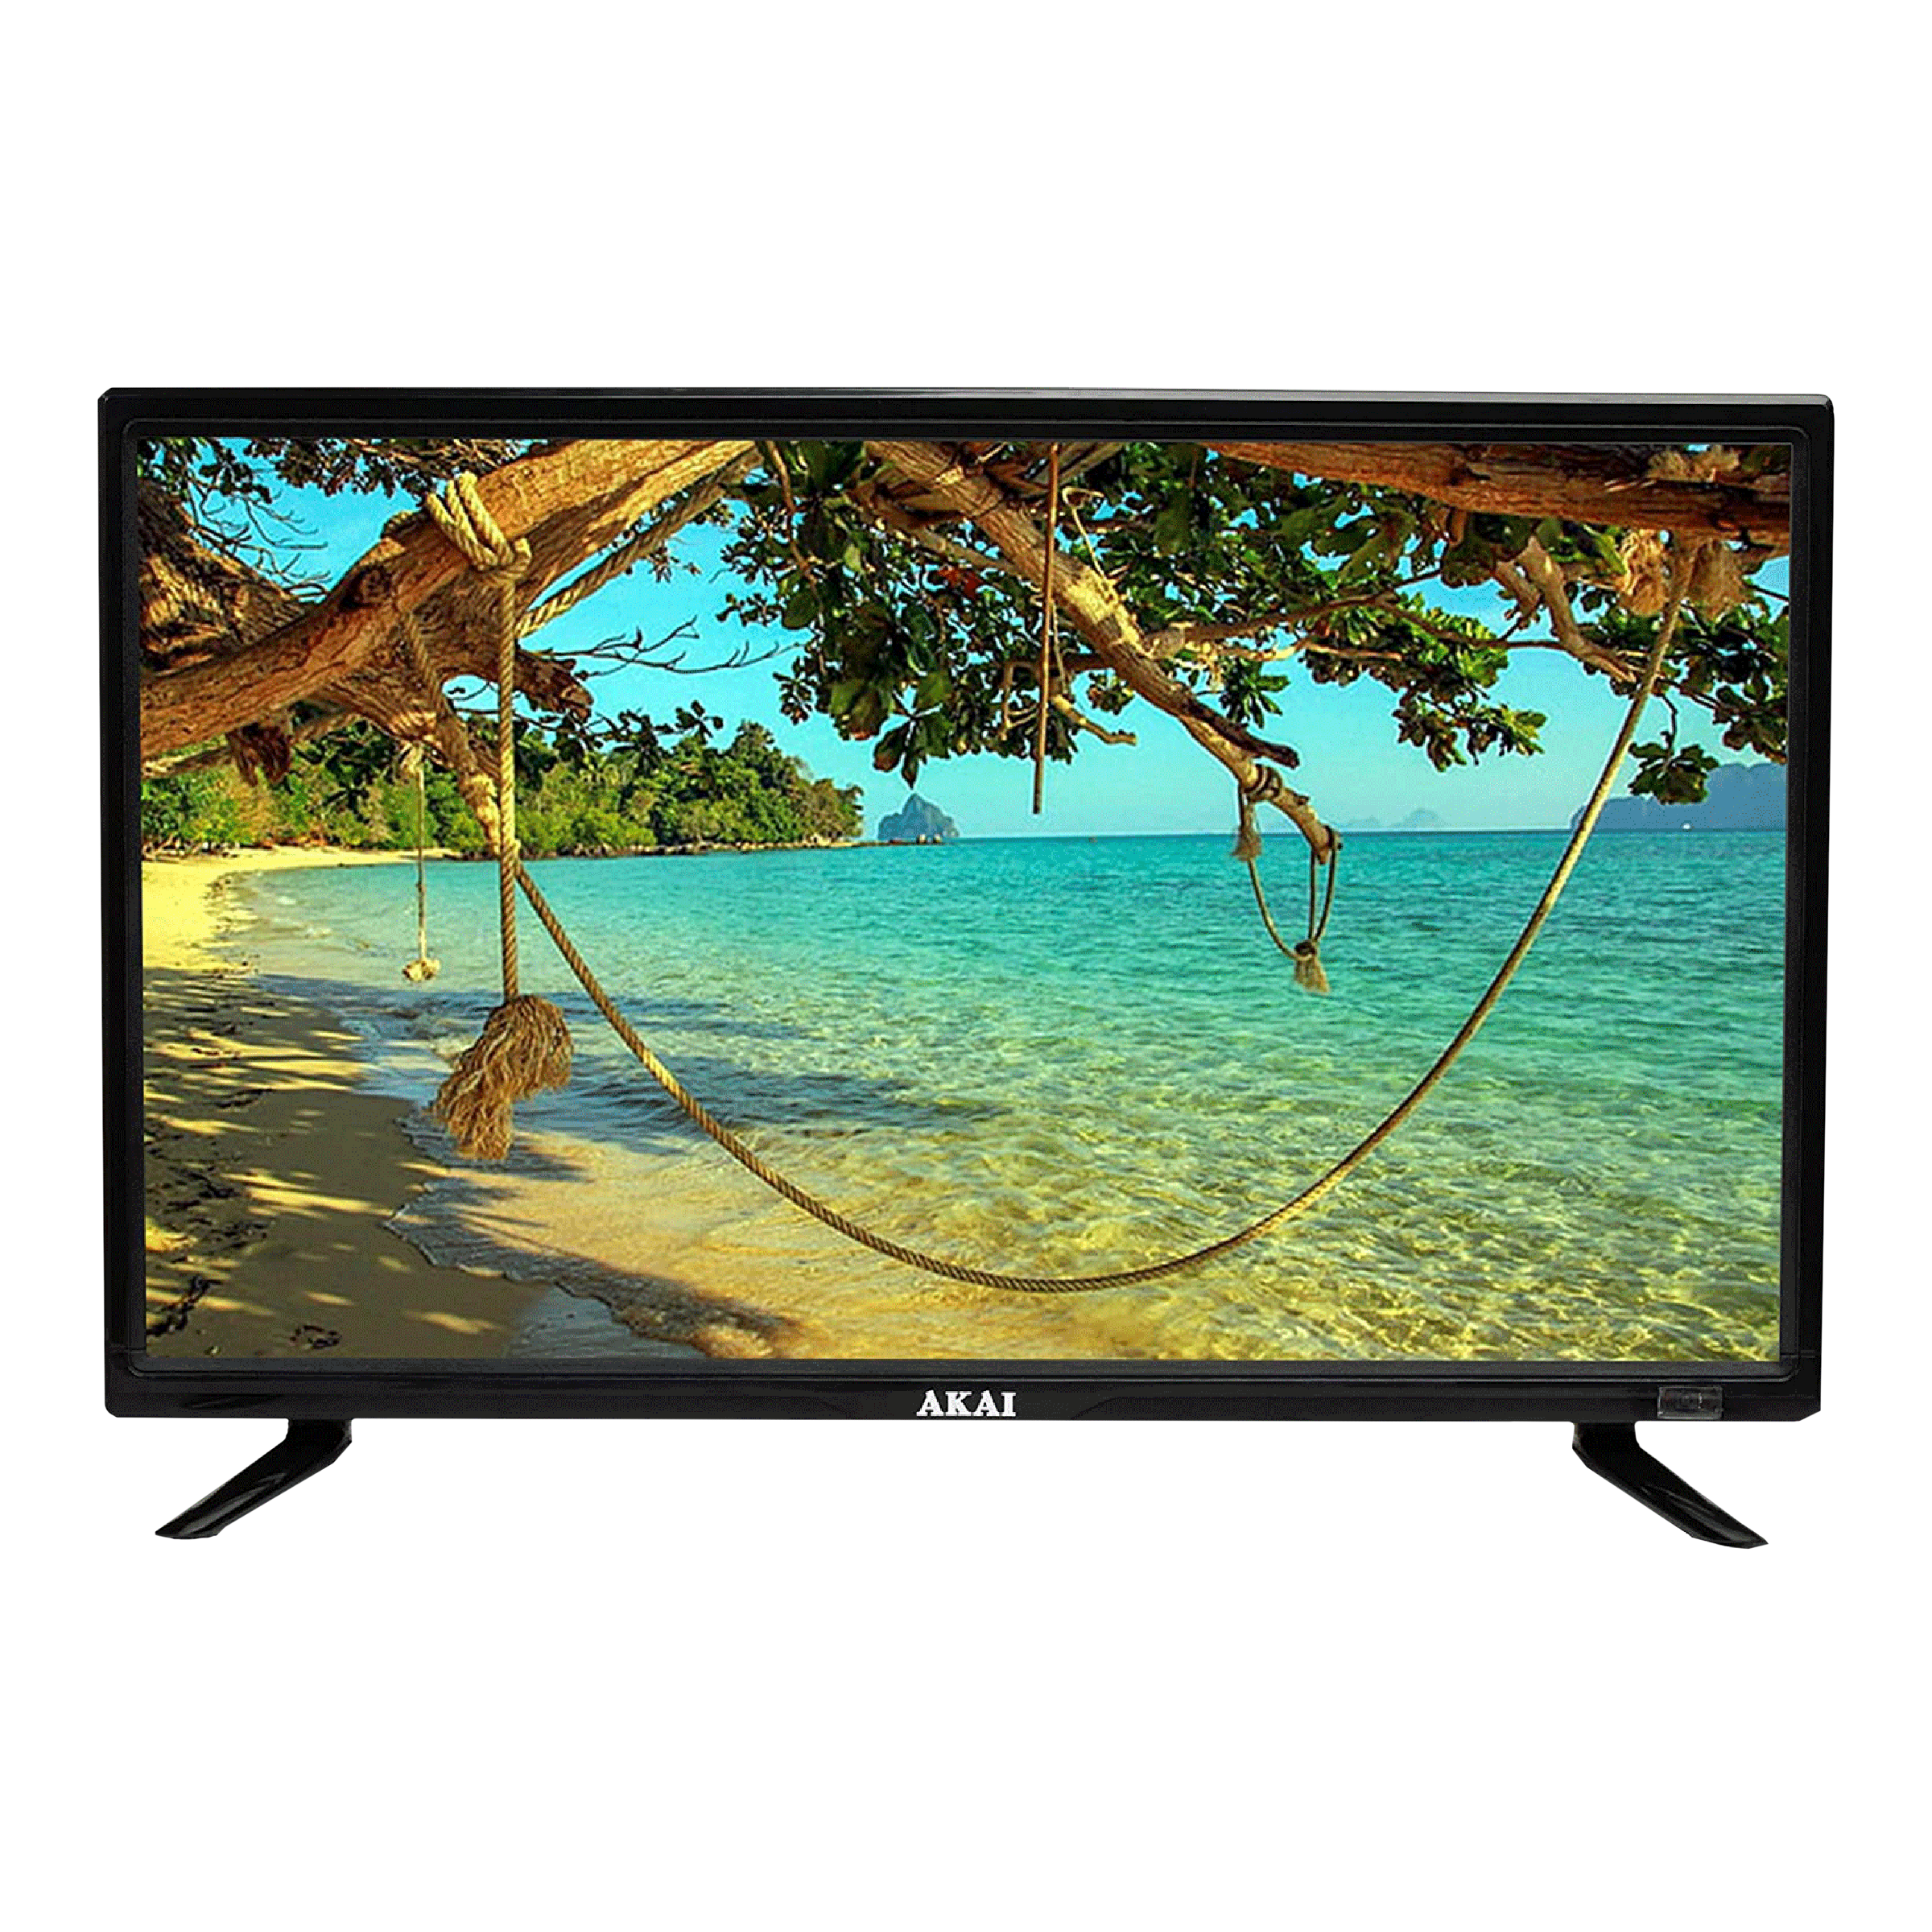 Akai 60 cm (24 inch) HD Ready LED TV with A+ Grade Panel (2020 model)_1